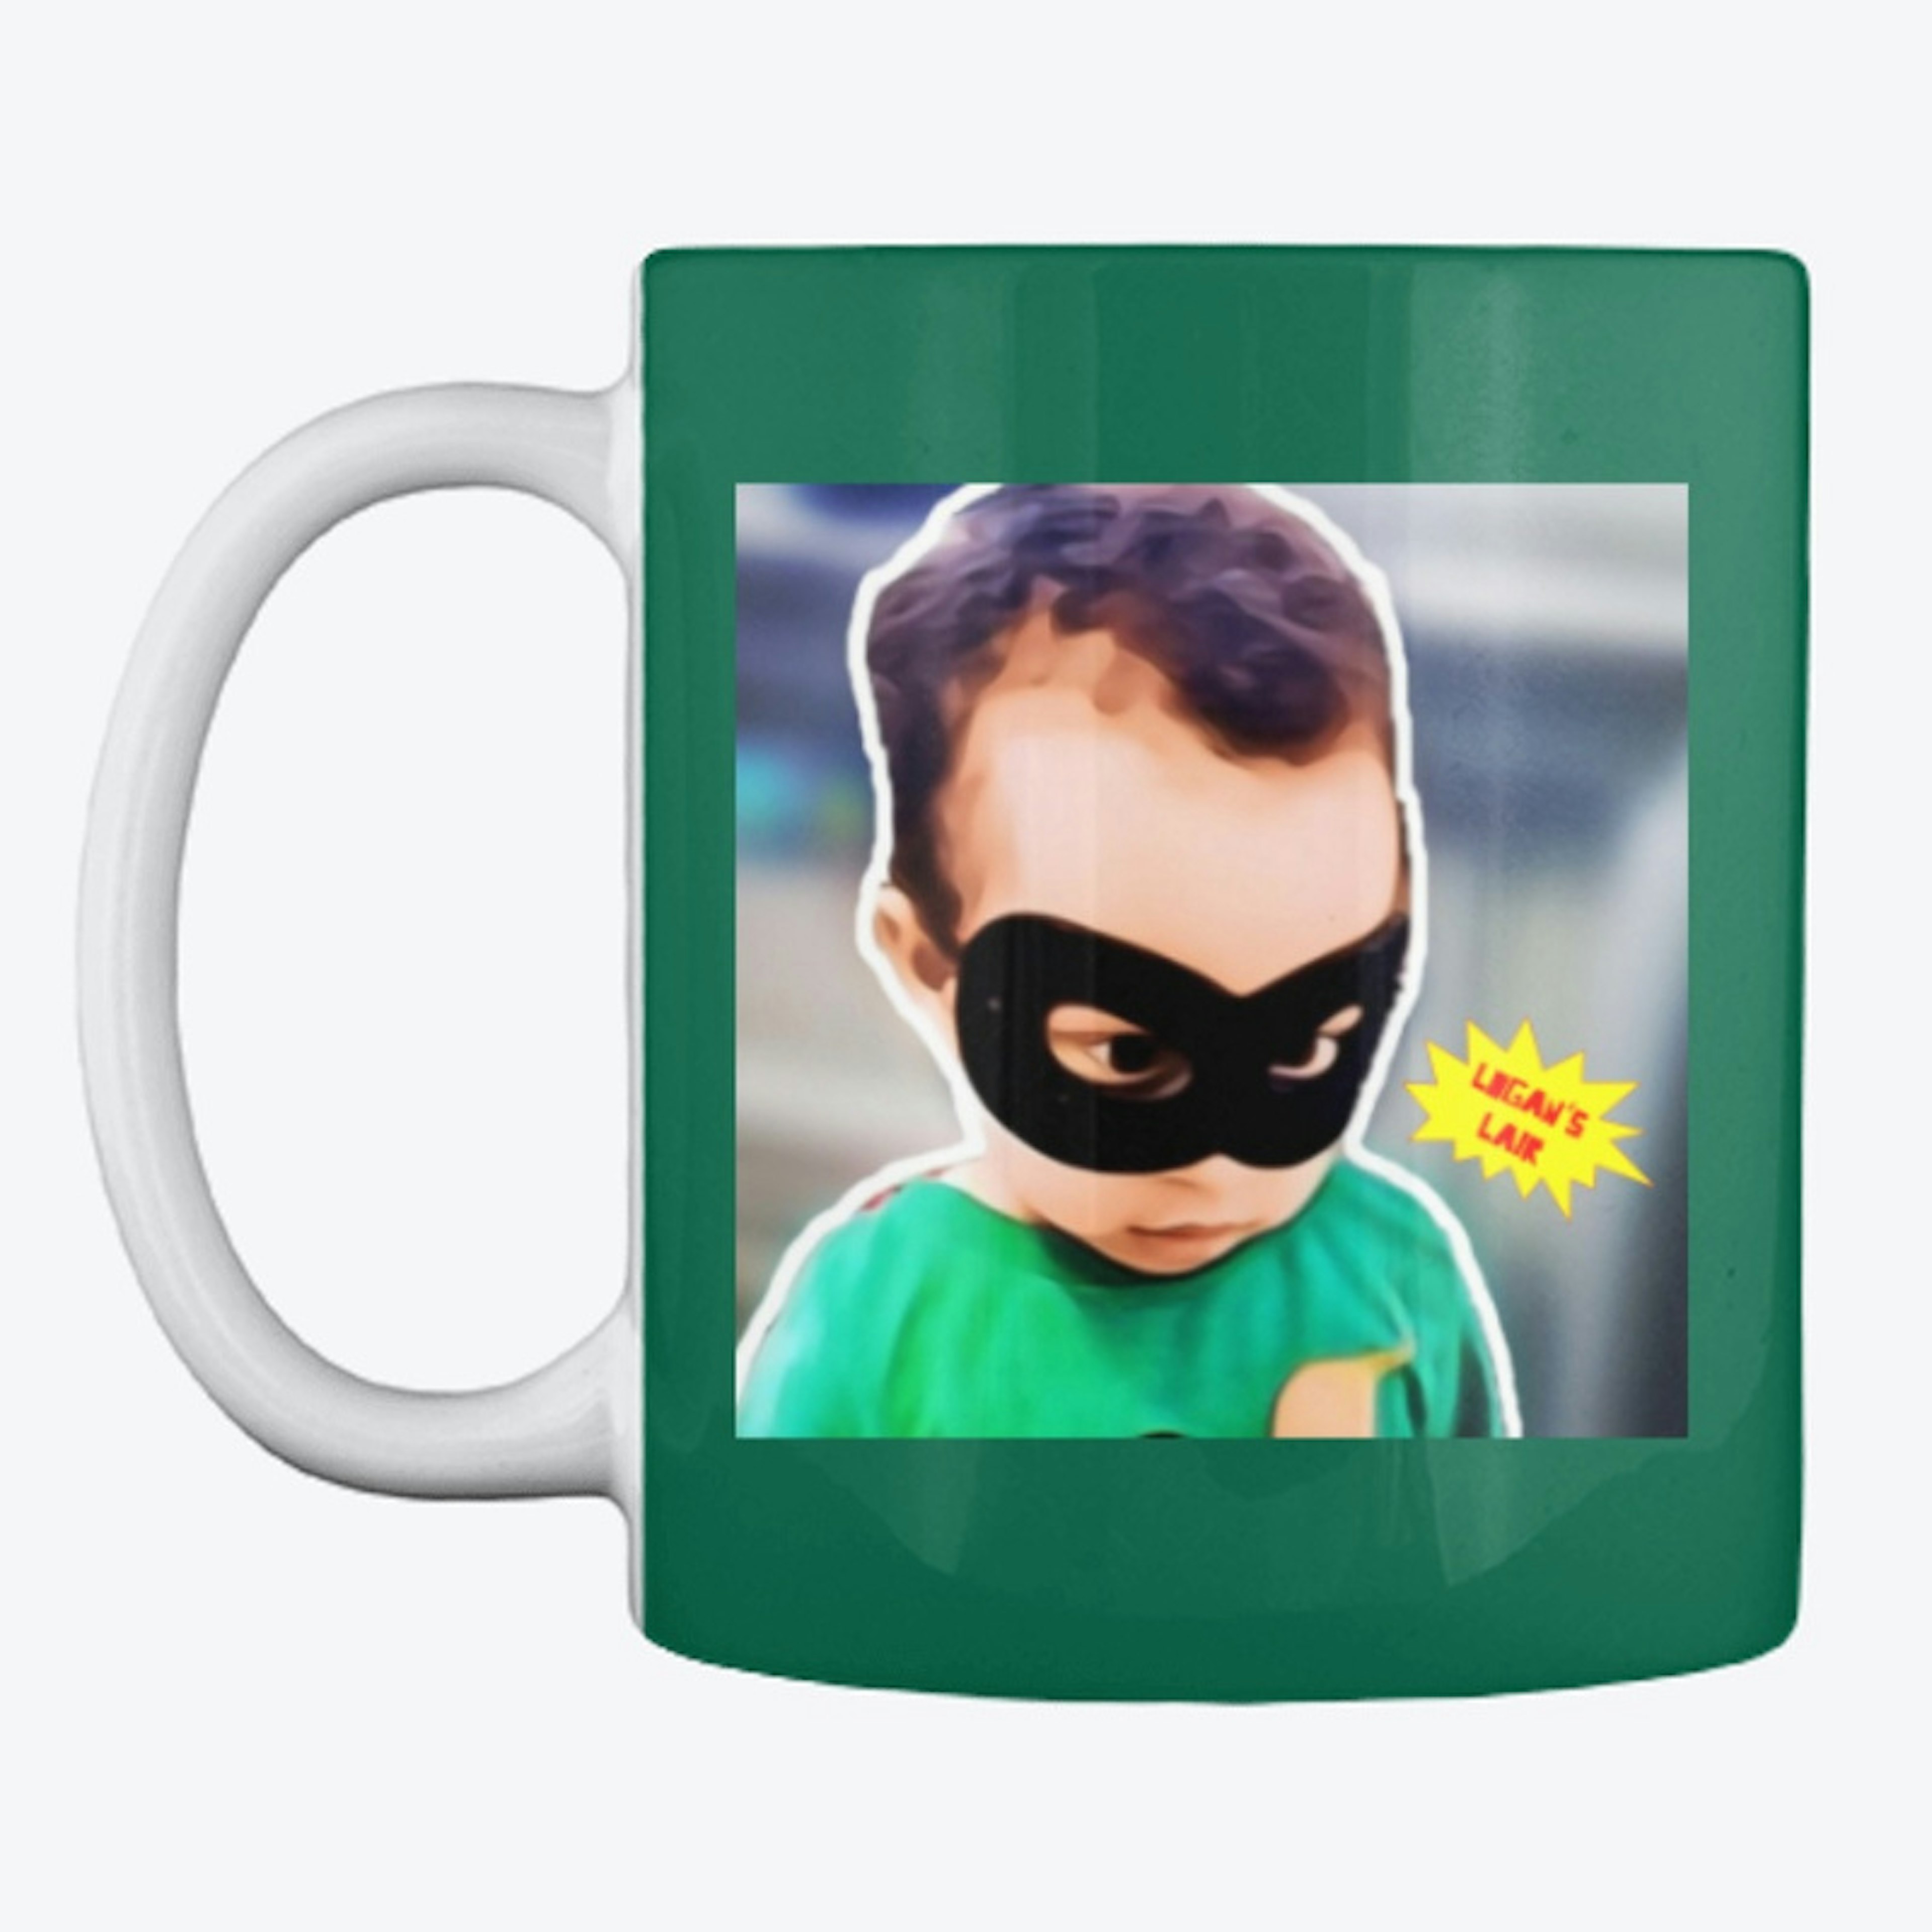 Logan's Lair Superhero Profile Mug